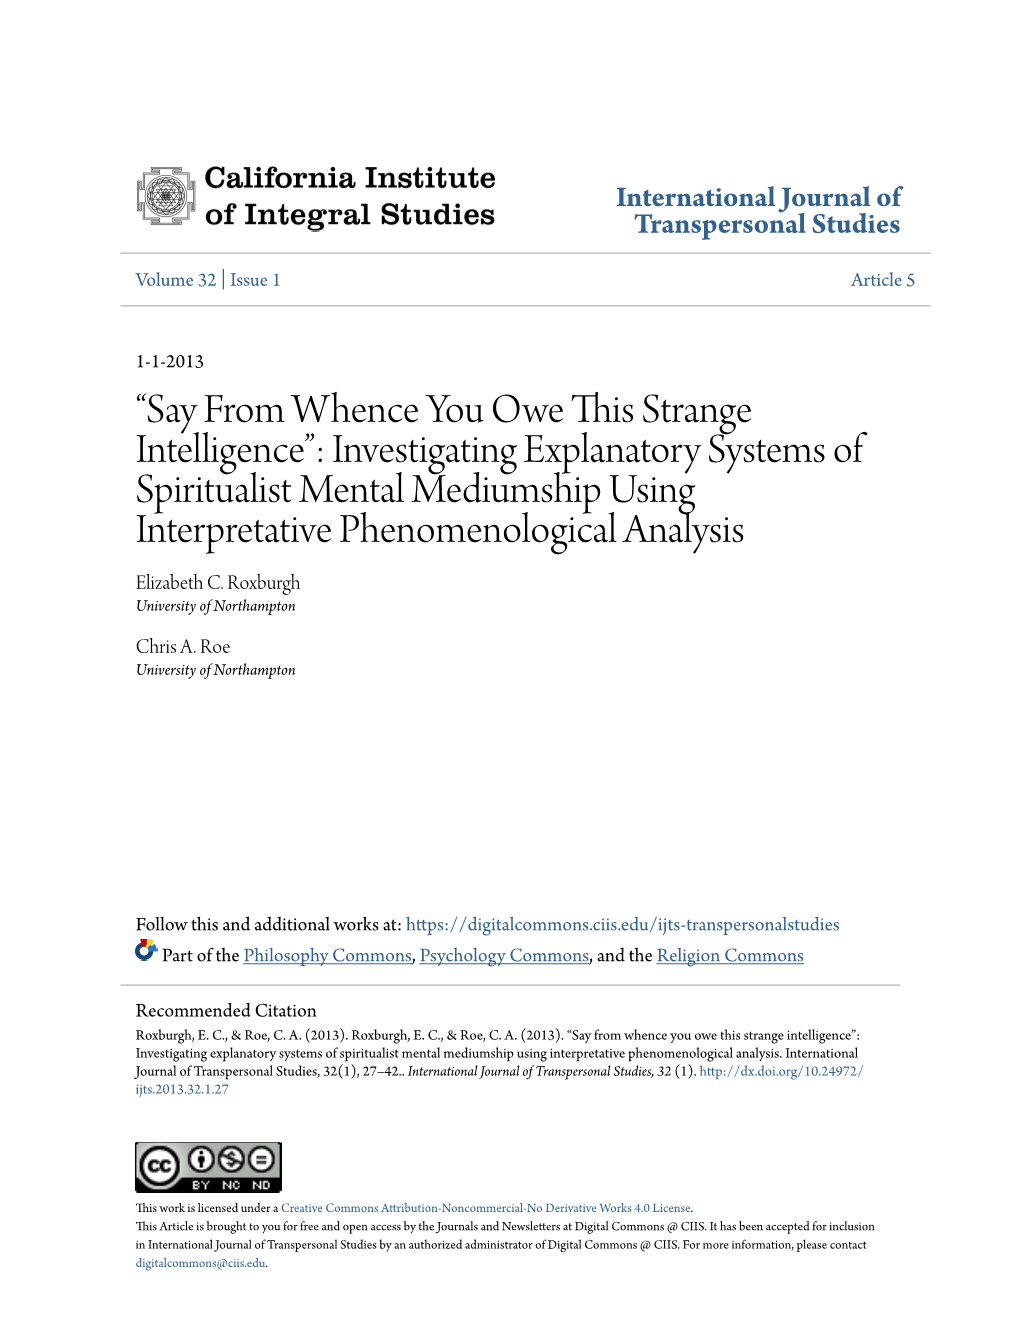 Investigating Explanatory Systems of Spiritualist Mental Mediumship Using Interpretative Phenomenological Analysis Elizabeth C